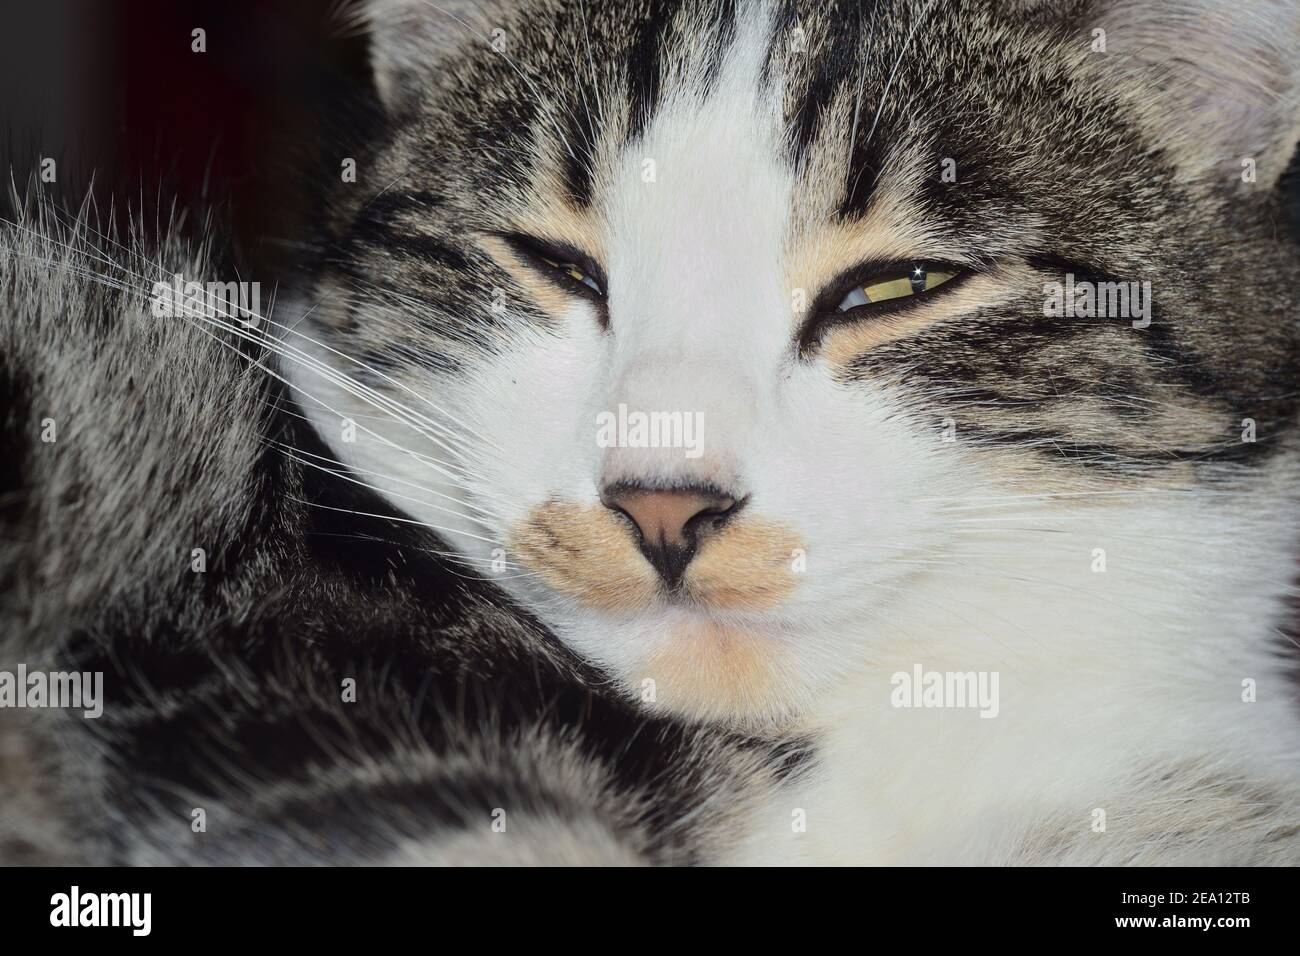 closeup portrait of a sleepy cat Stock Photo